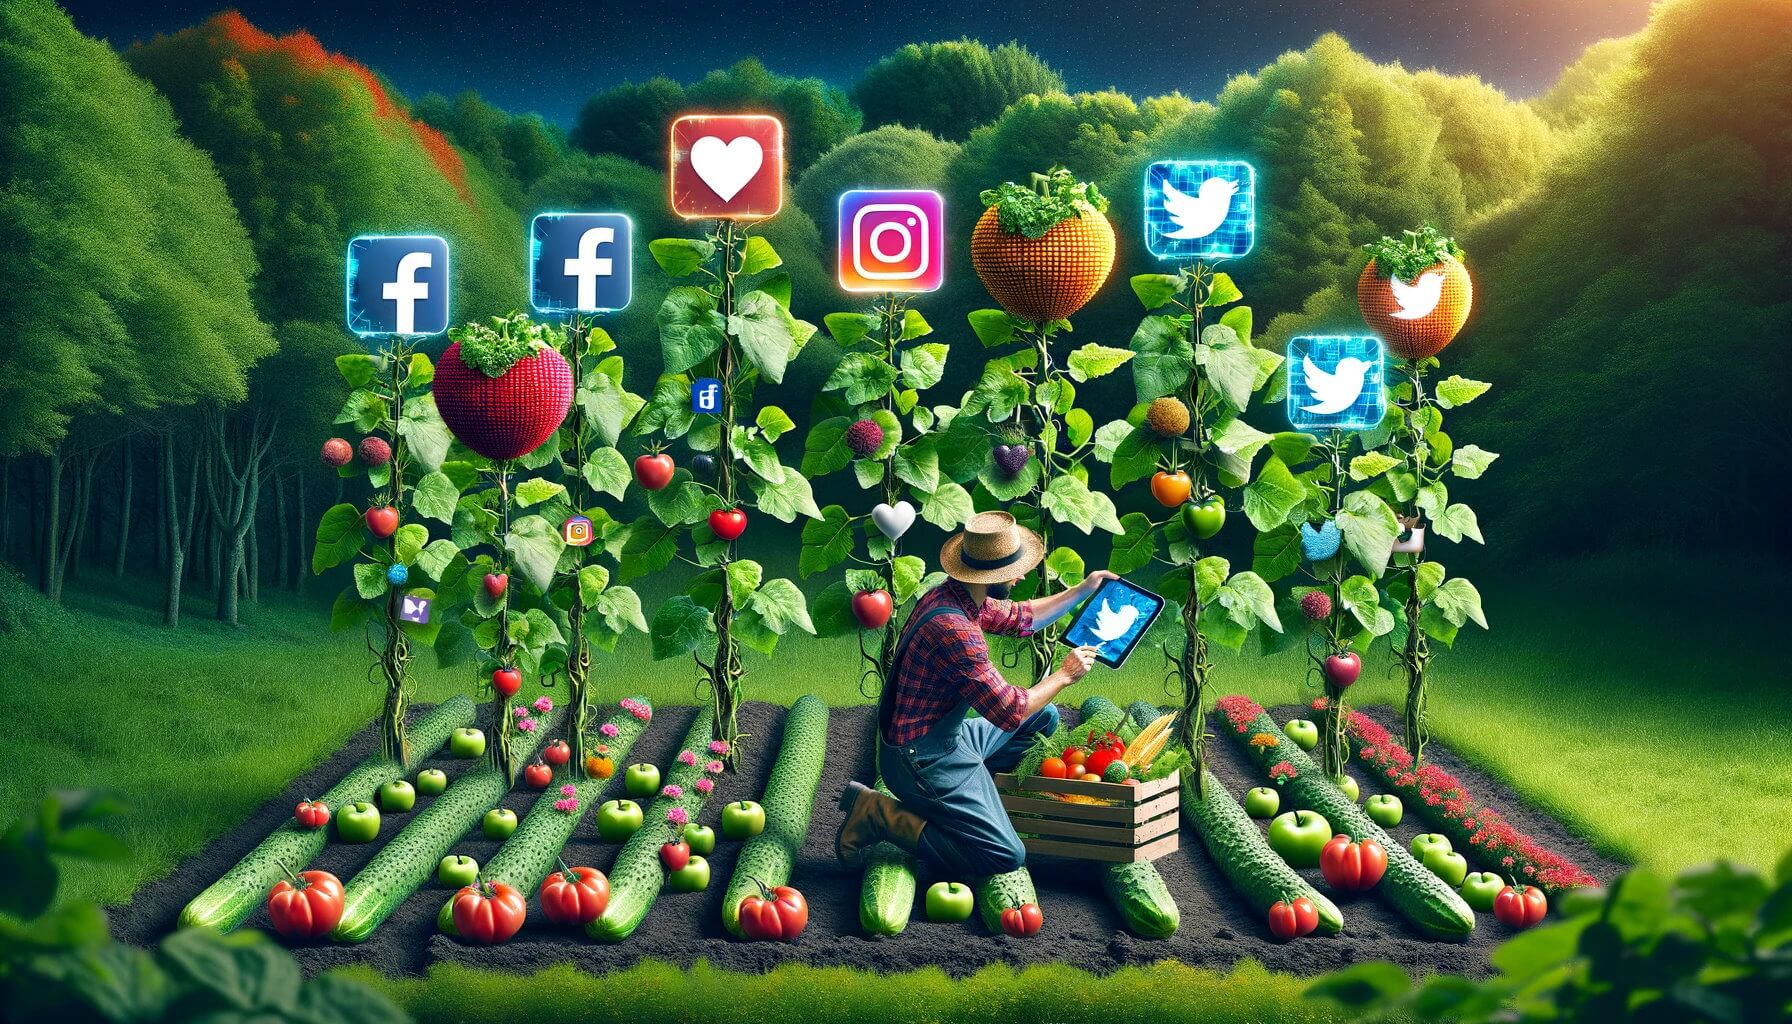 In an imaginative digital farm scene, an agripreneur dressed in modern farming attire is harvesting social media posts from a network of vines